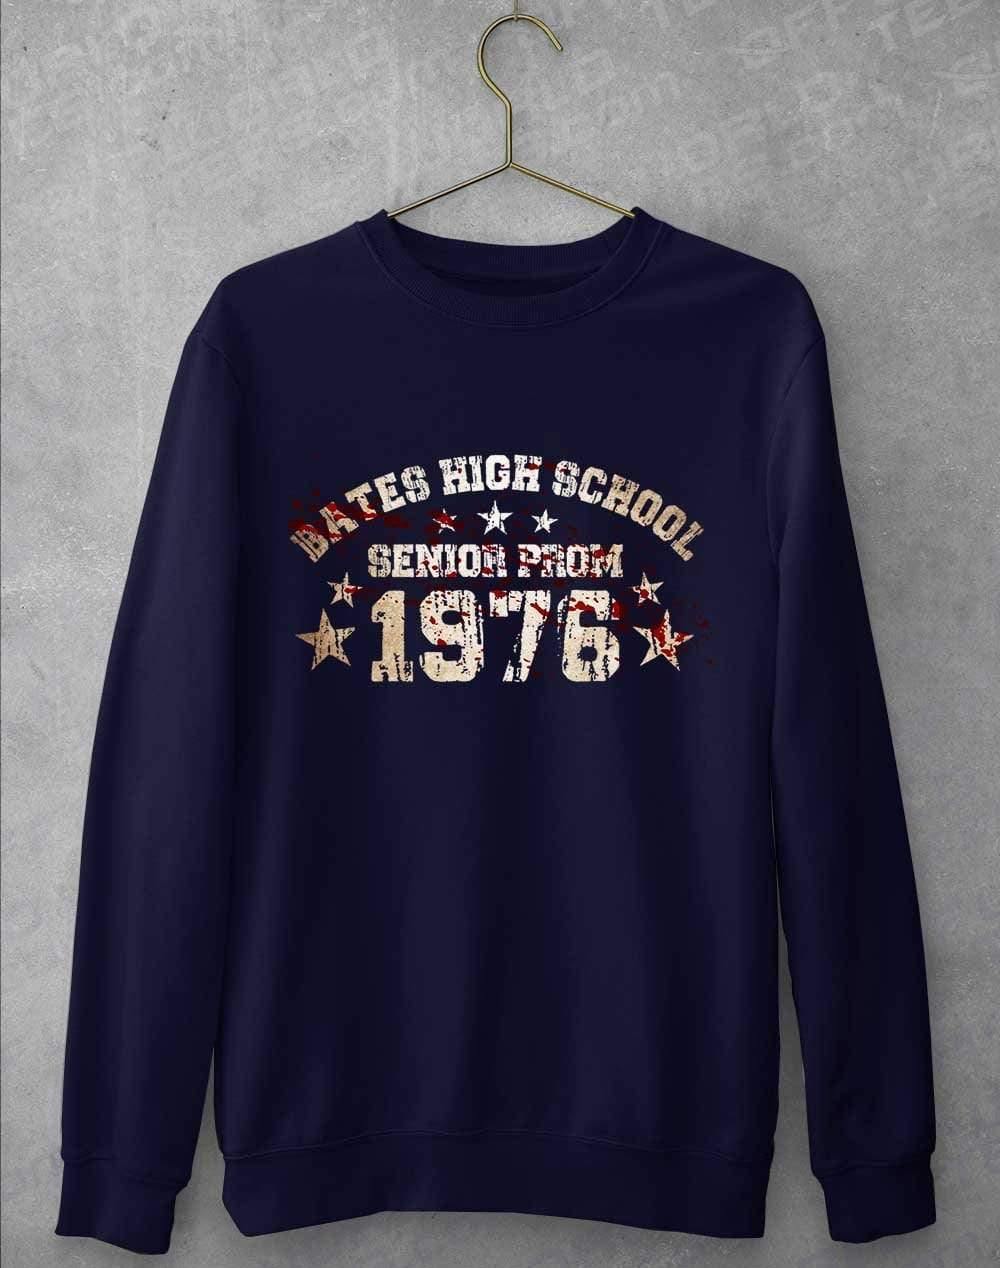 Bates High School Prom 1976 Sweatshirt S / Oxford Navy  - Off World Tees